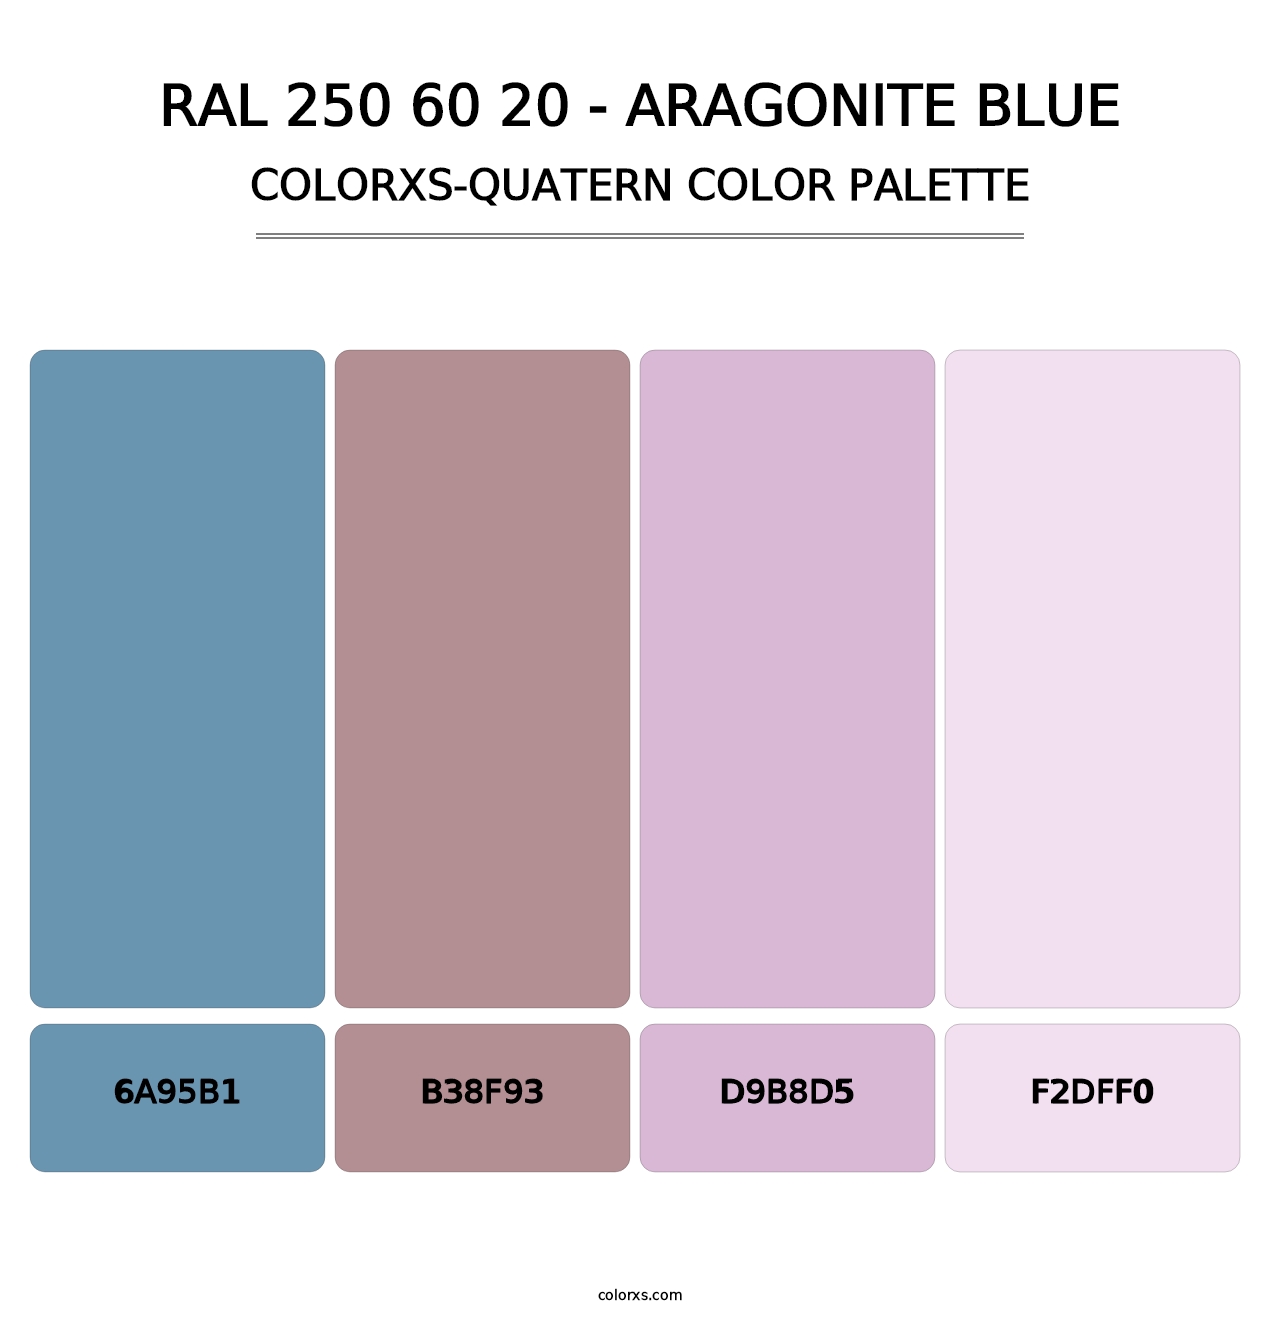 RAL 250 60 20 - Aragonite Blue - Colorxs Quatern Palette